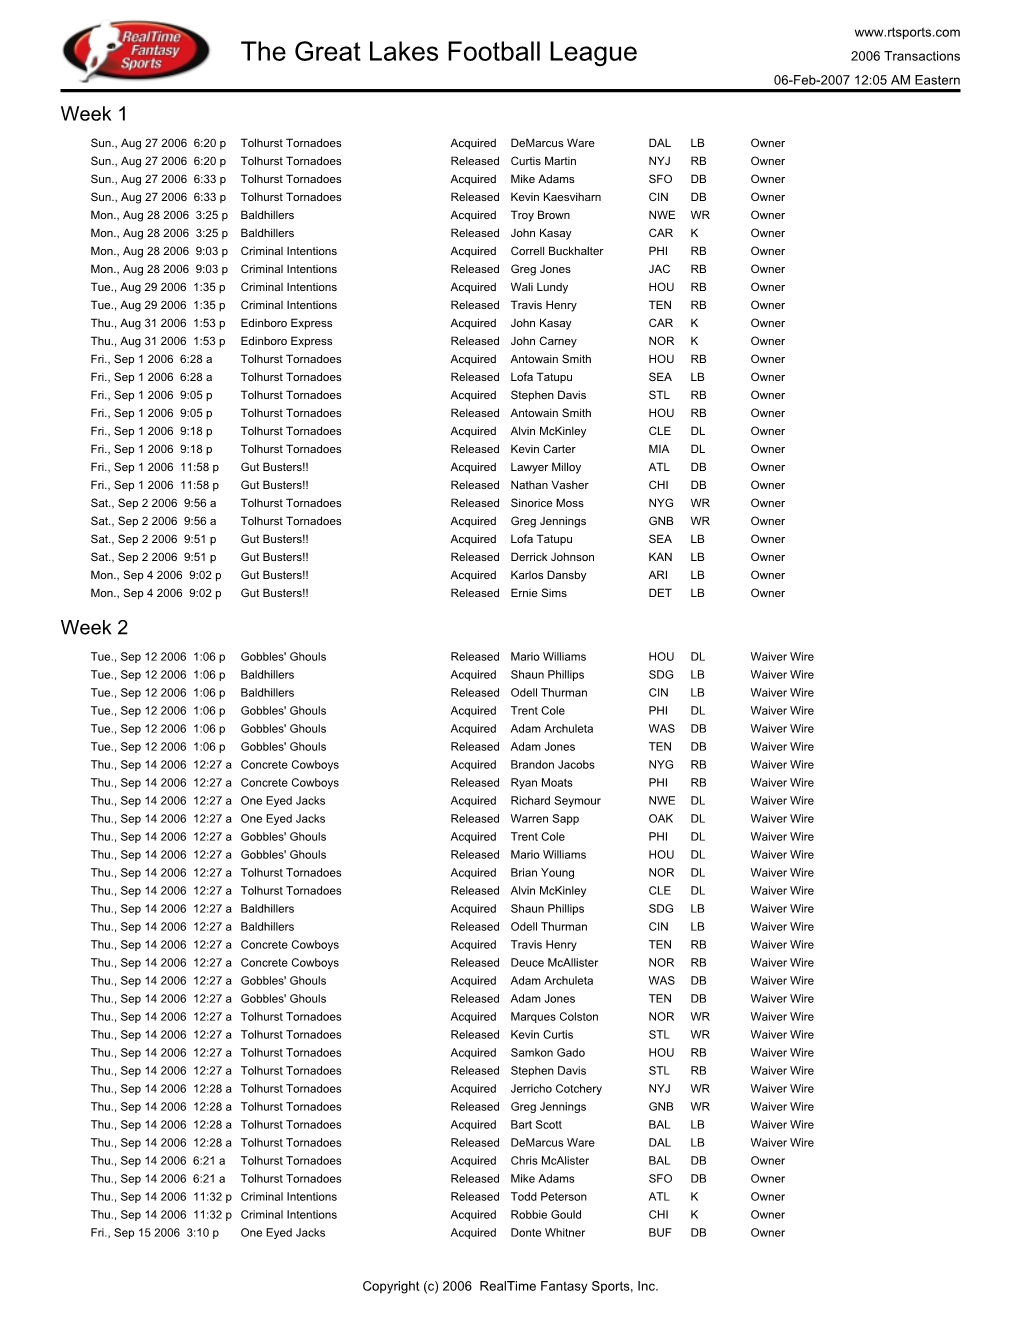 The Great Lakes Football League 2006 Transactions 06-Feb-2007 12:05 AM Eastern Week 1